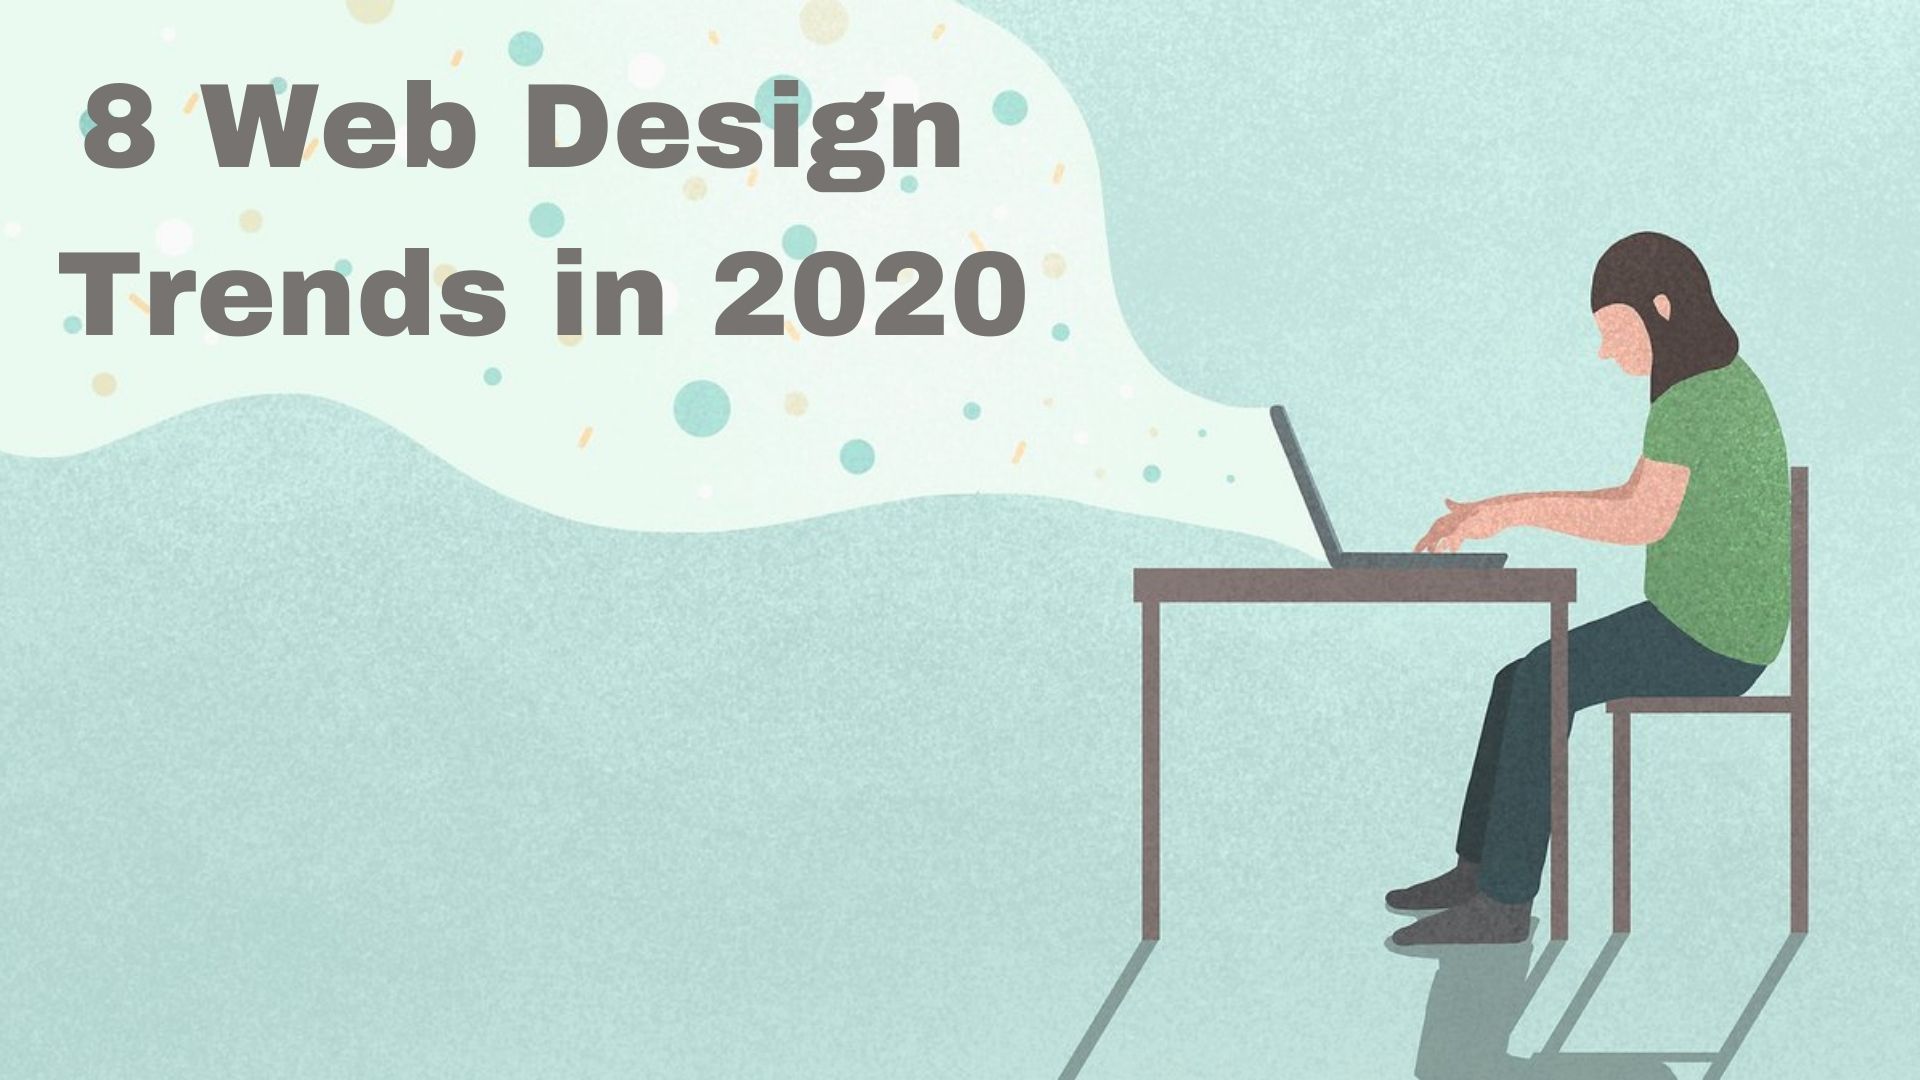 Web Design Trends in 2020